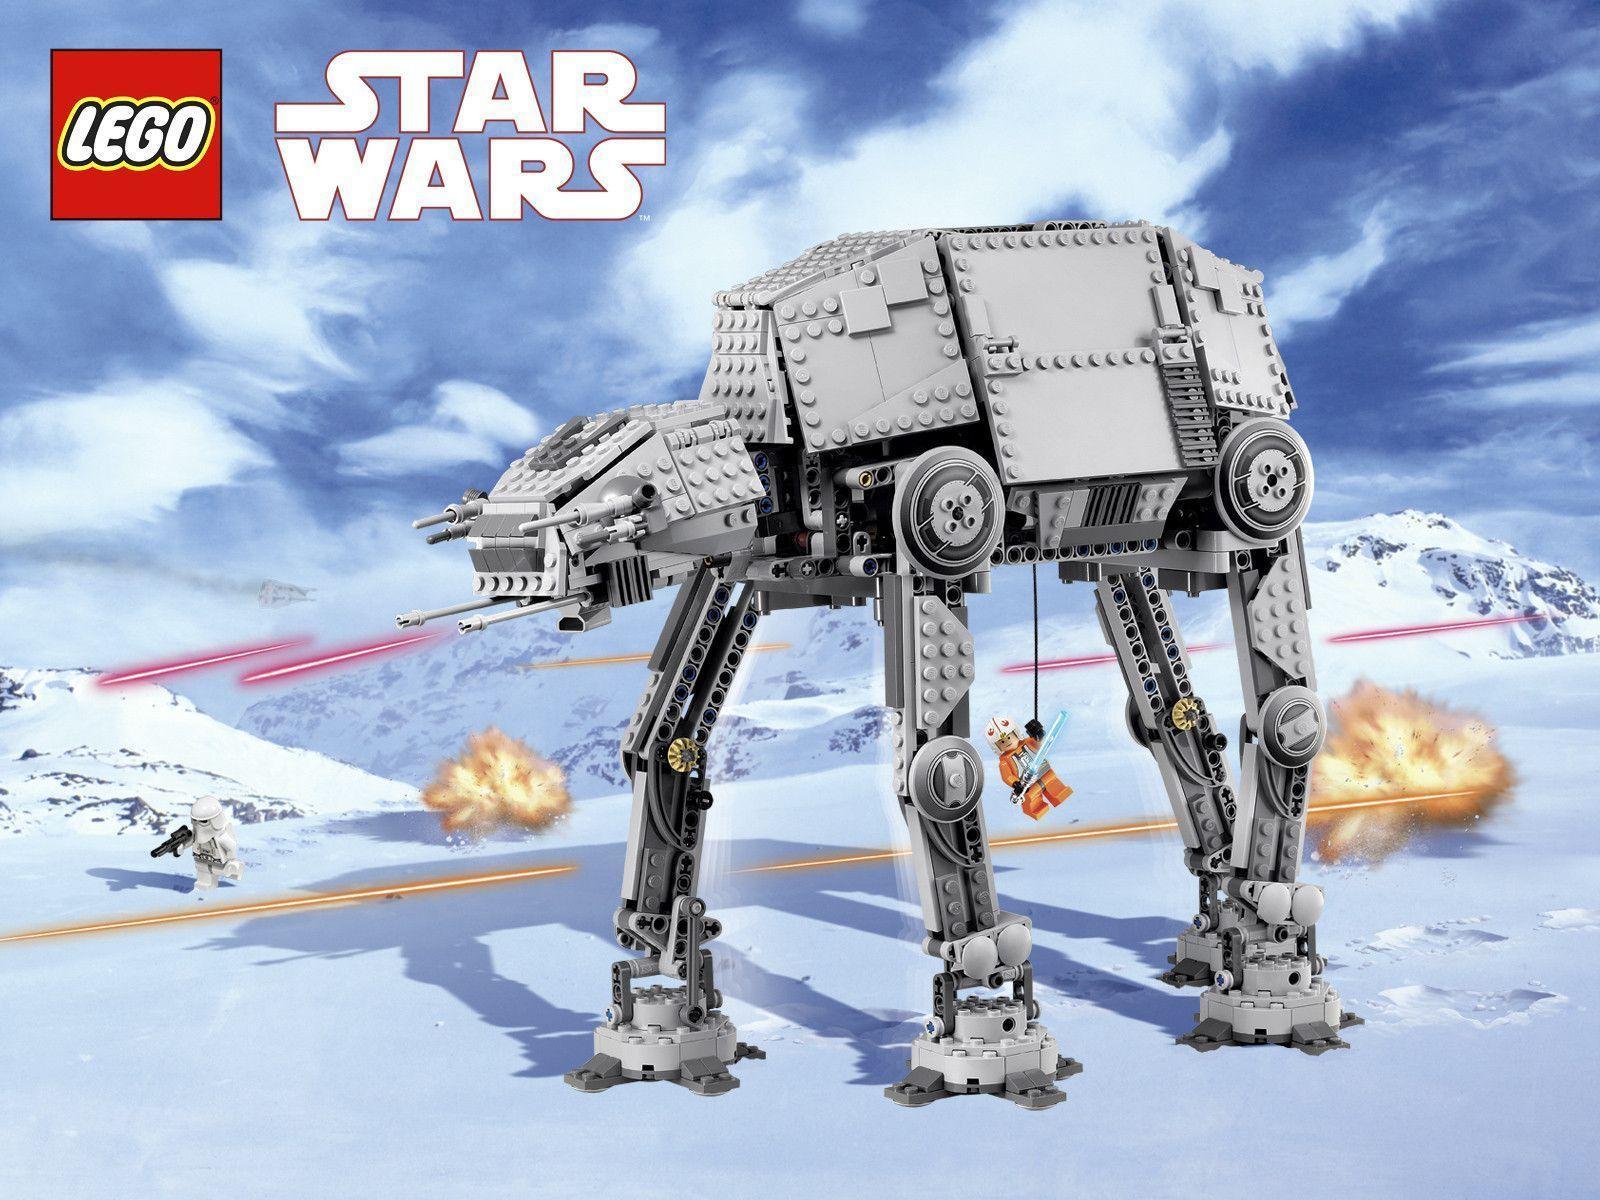 Lego Star Wars TheWallpaper. Free Desktop Wallpaper for HD